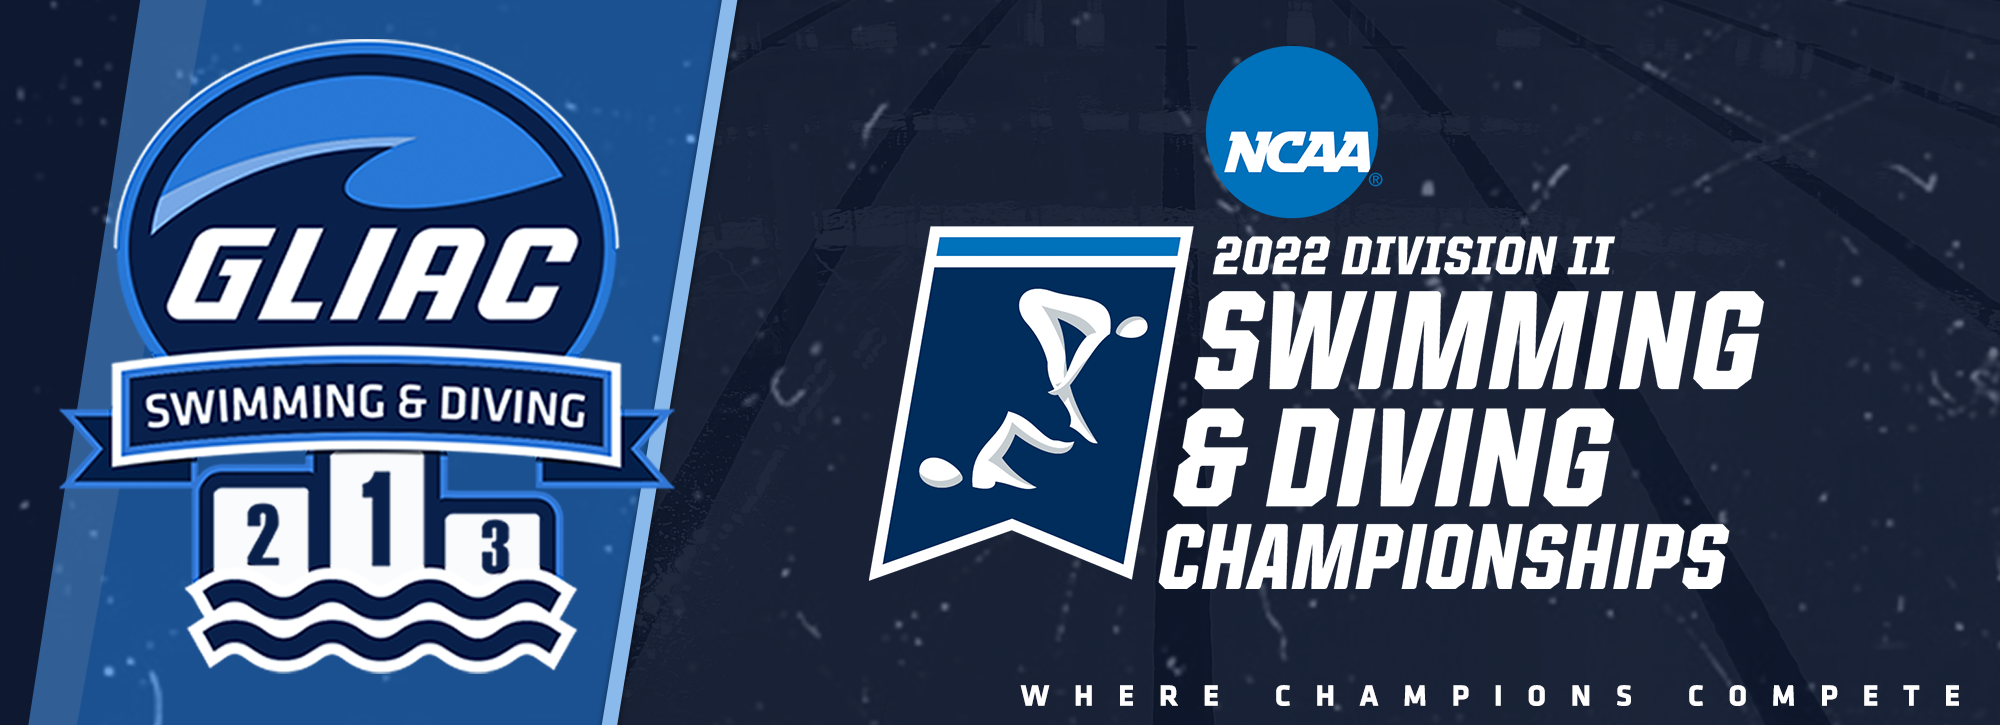 GSVU's Segard and NMU's Zach win individual titles at the 2022 NCAA Division II Swimming & Diving Championships